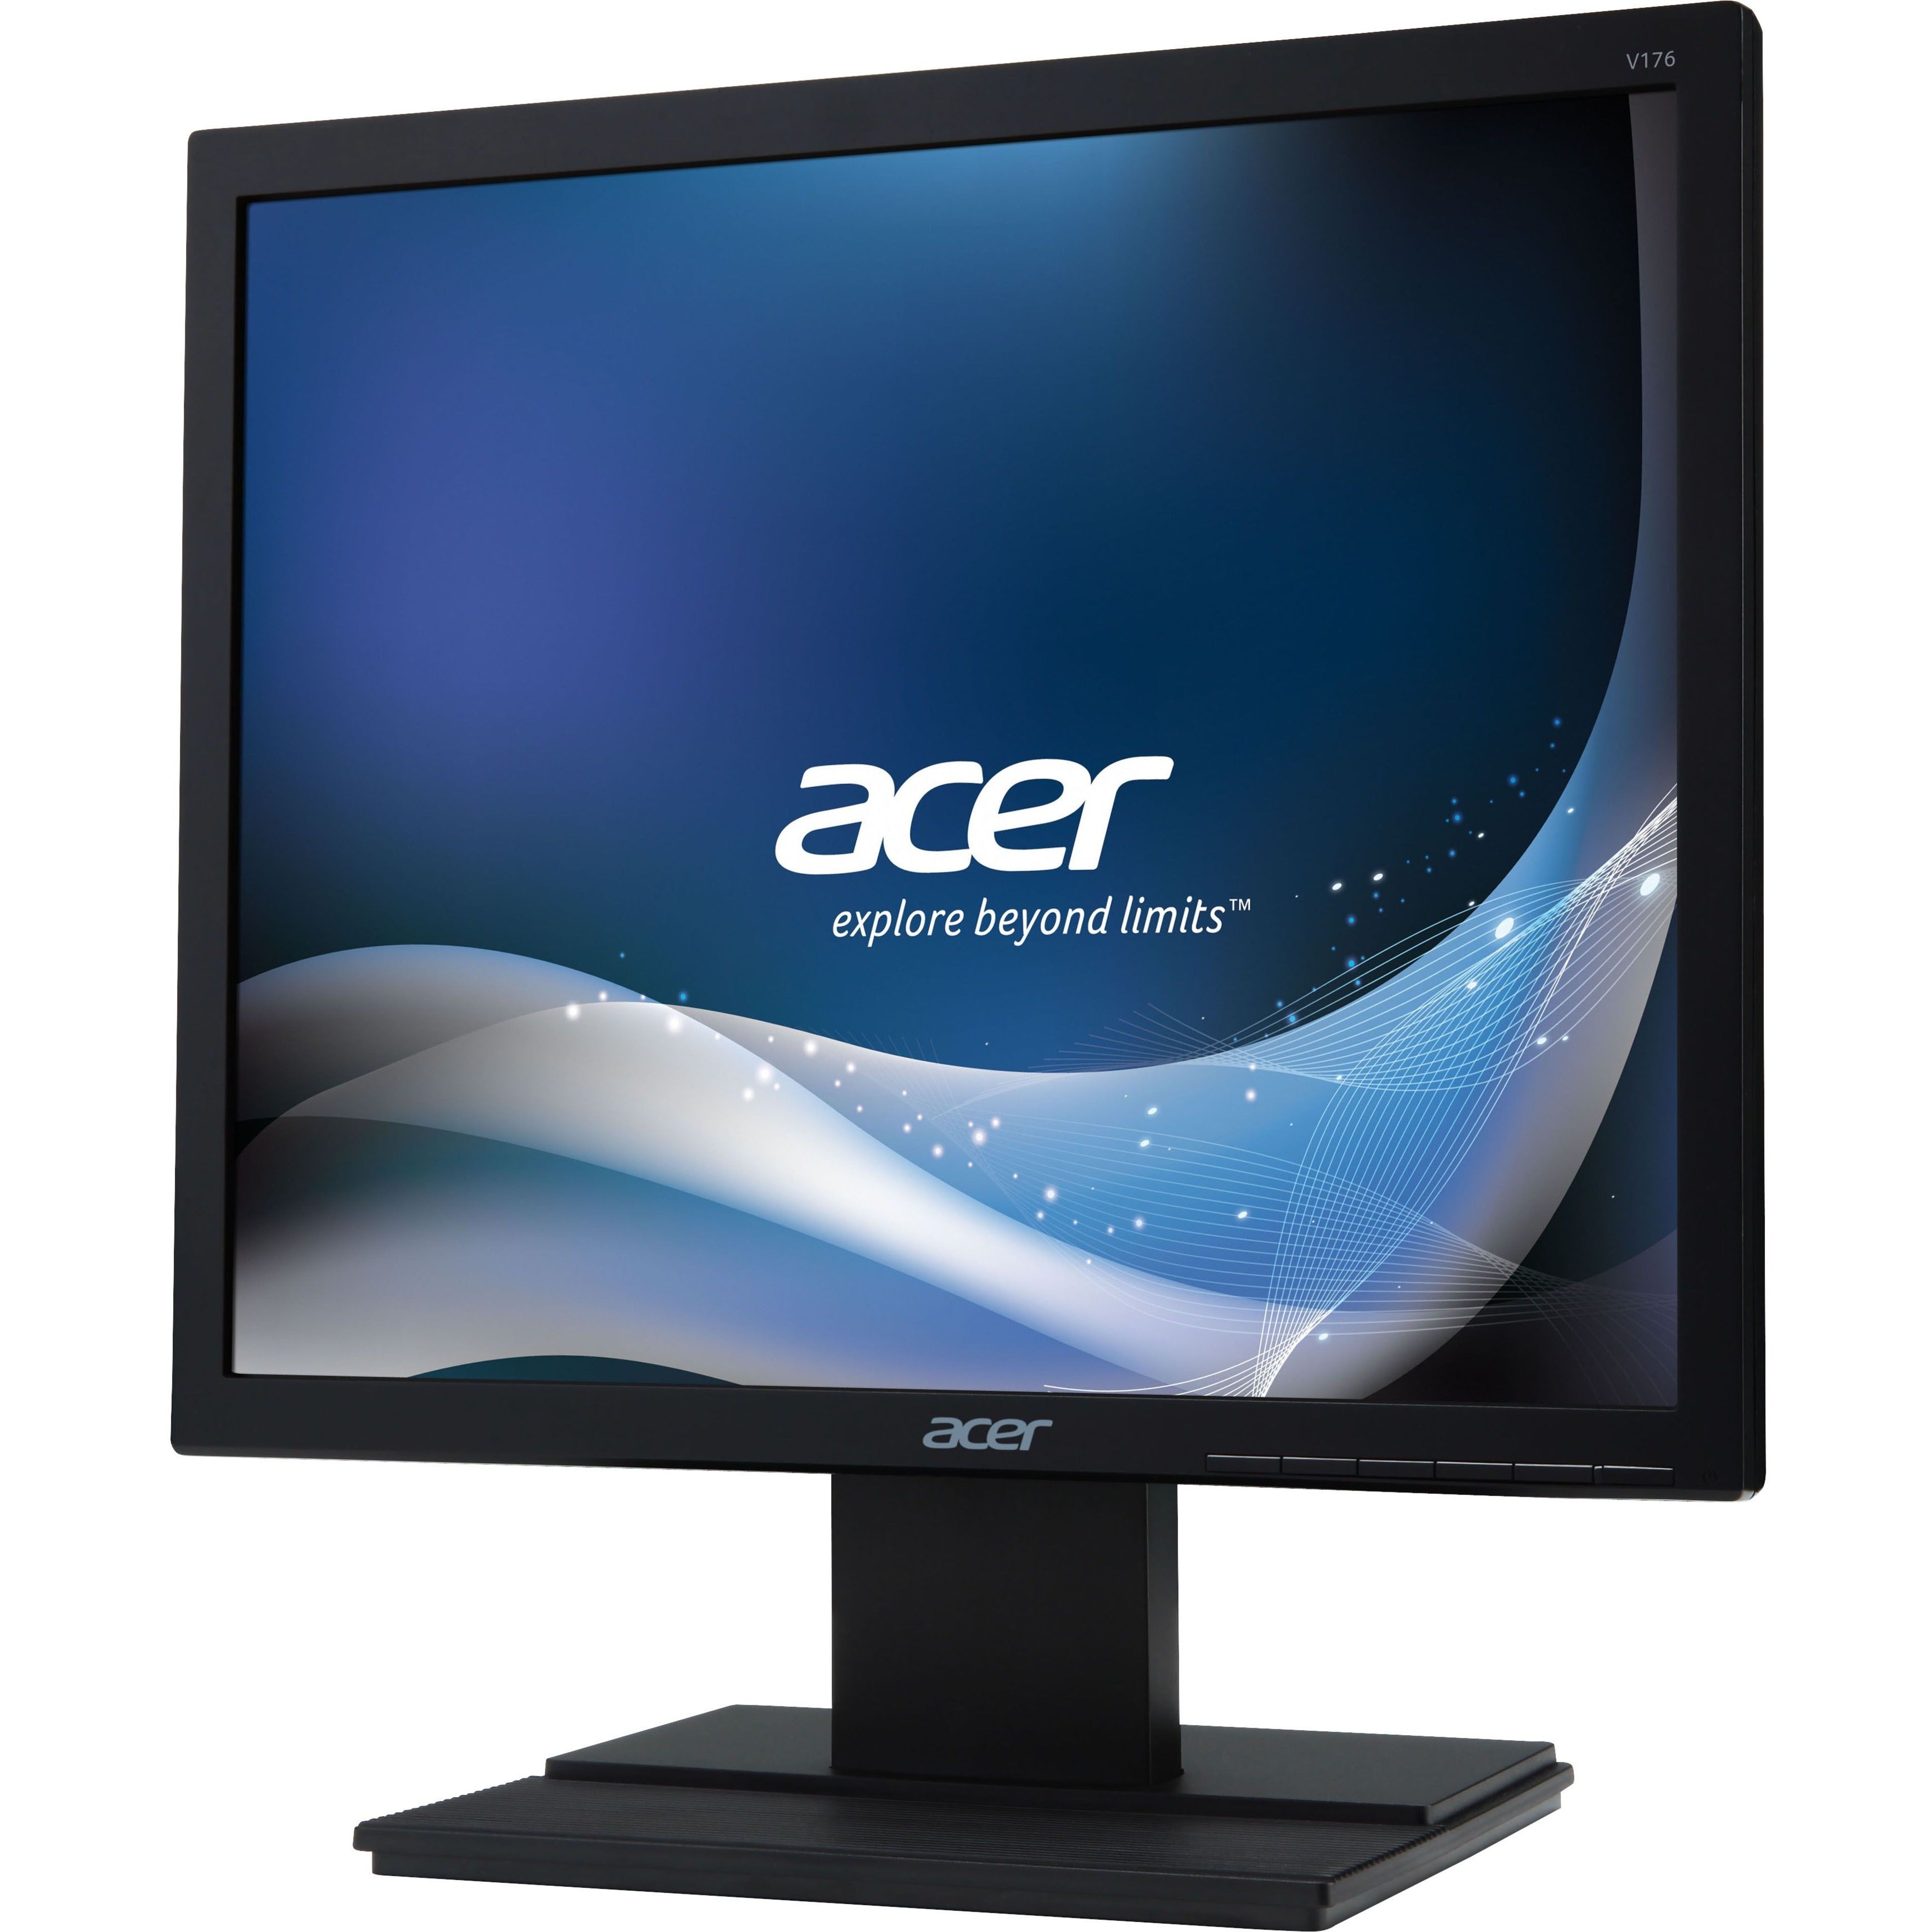 Acer UM.BV6AA.001 V176L LCD Monitor, 17 5:4 5ms 100000000:1 Max(ACM) 250nits LED, VGA DVI (w/HDCP) US PA PA TCO6.0 Black